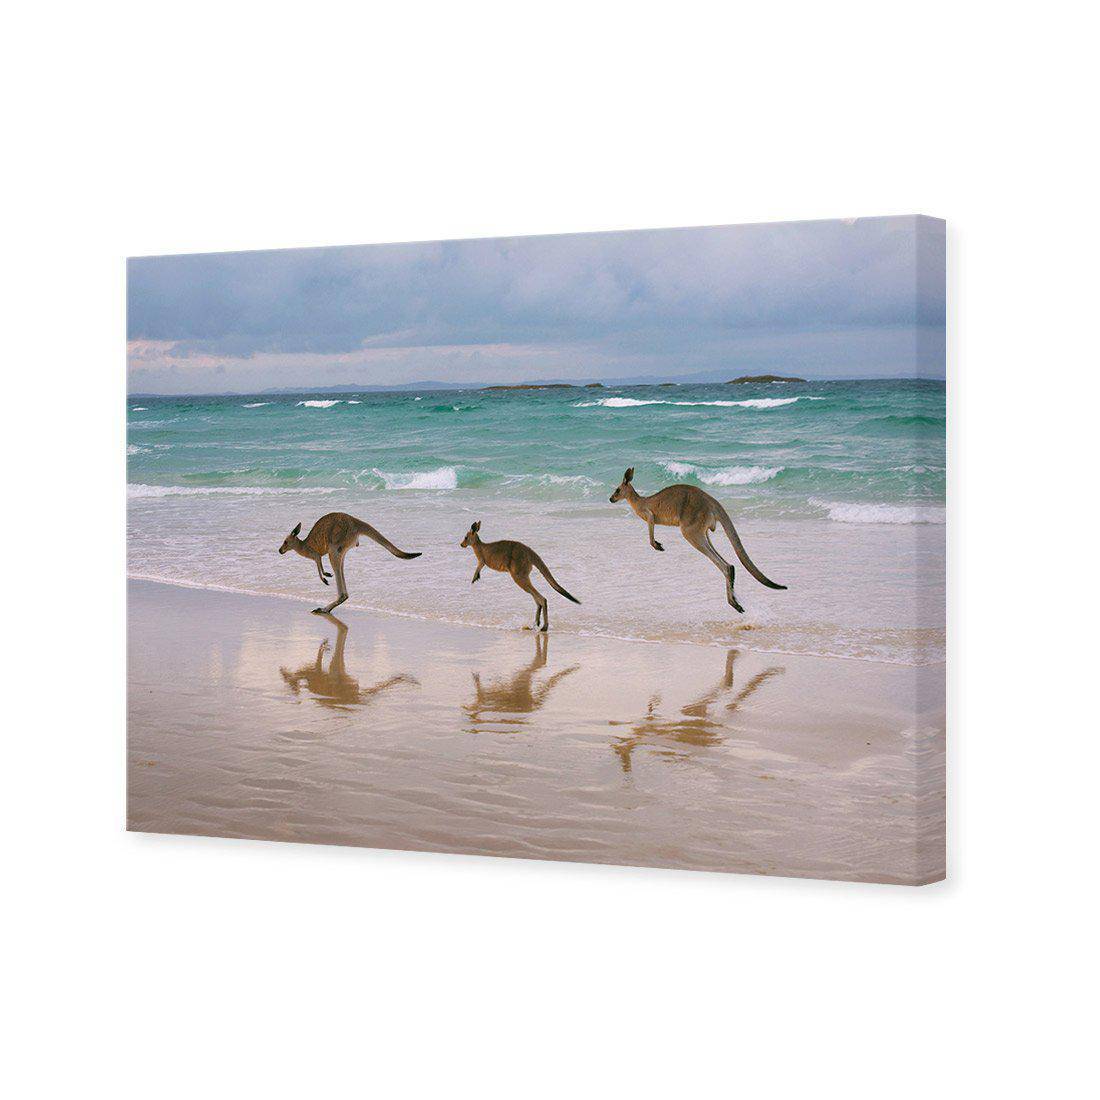 Kangaroos on Vacation Canvas Art-Canvas-Wall Art Designs-45x30cm-Canvas - No Frame-Wall Art Designs